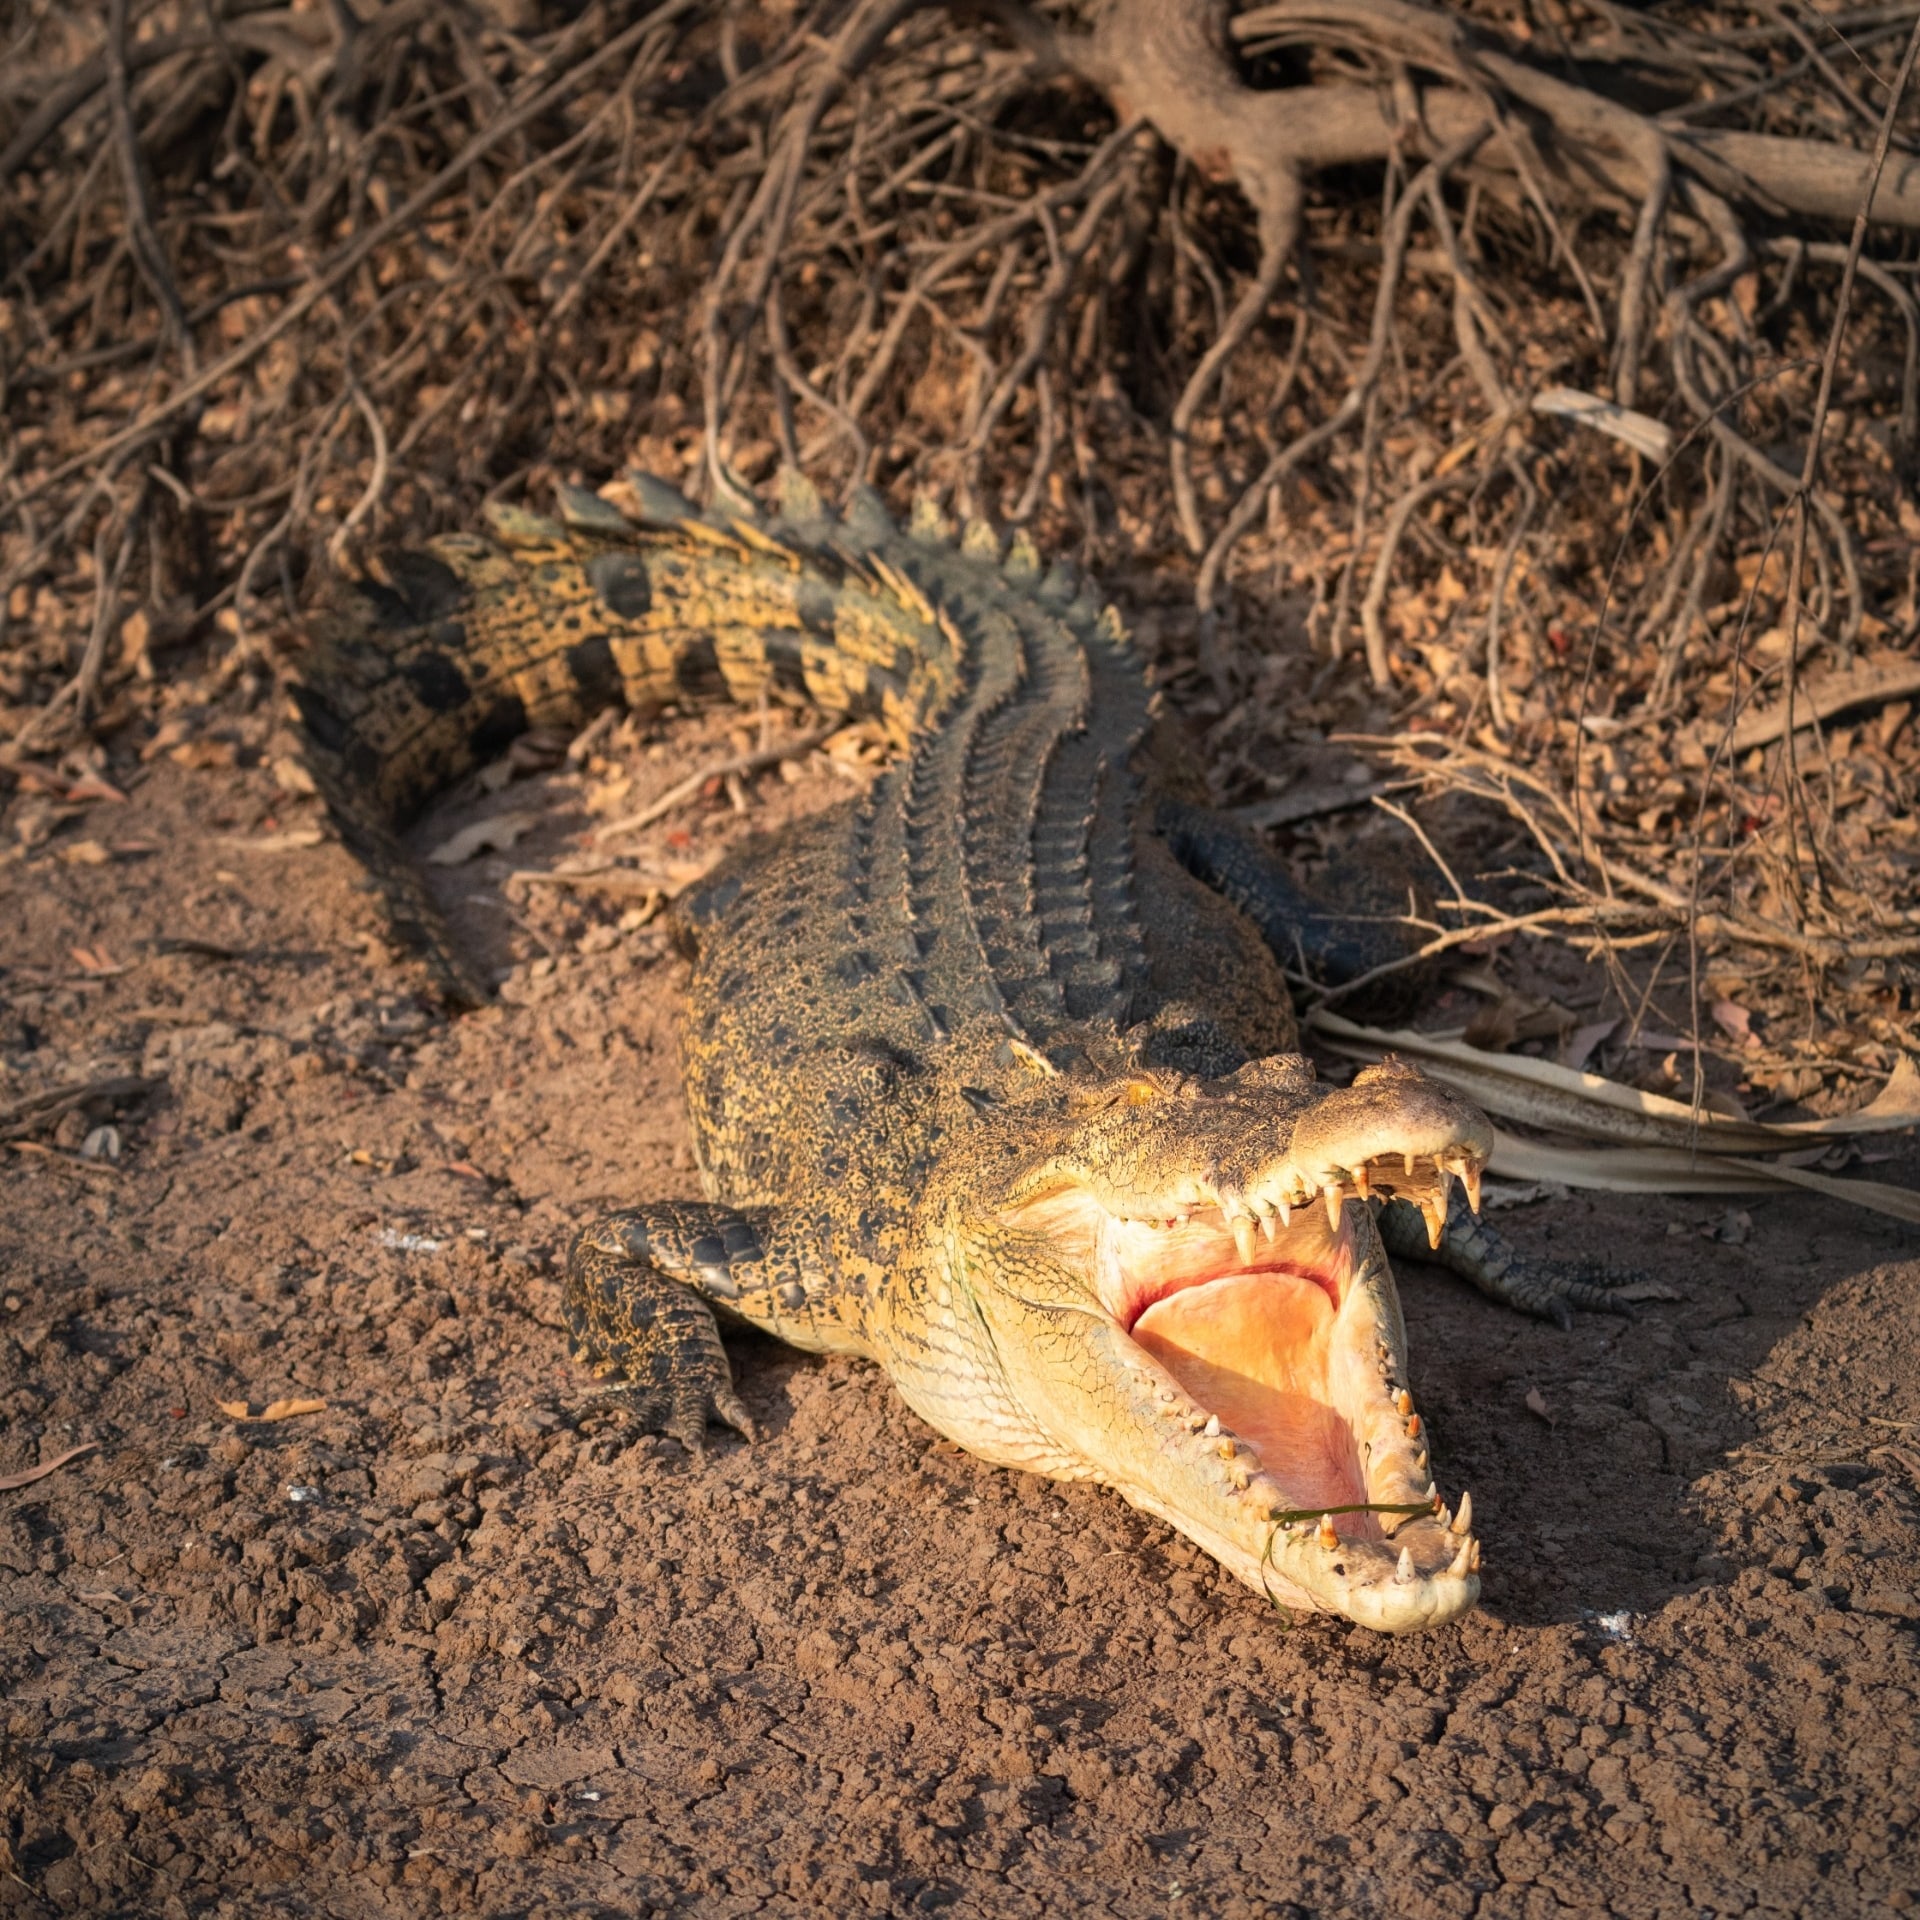 Crocodile, Kakadu National Park, Northern Territory © Tourism NT/Daniel Tran